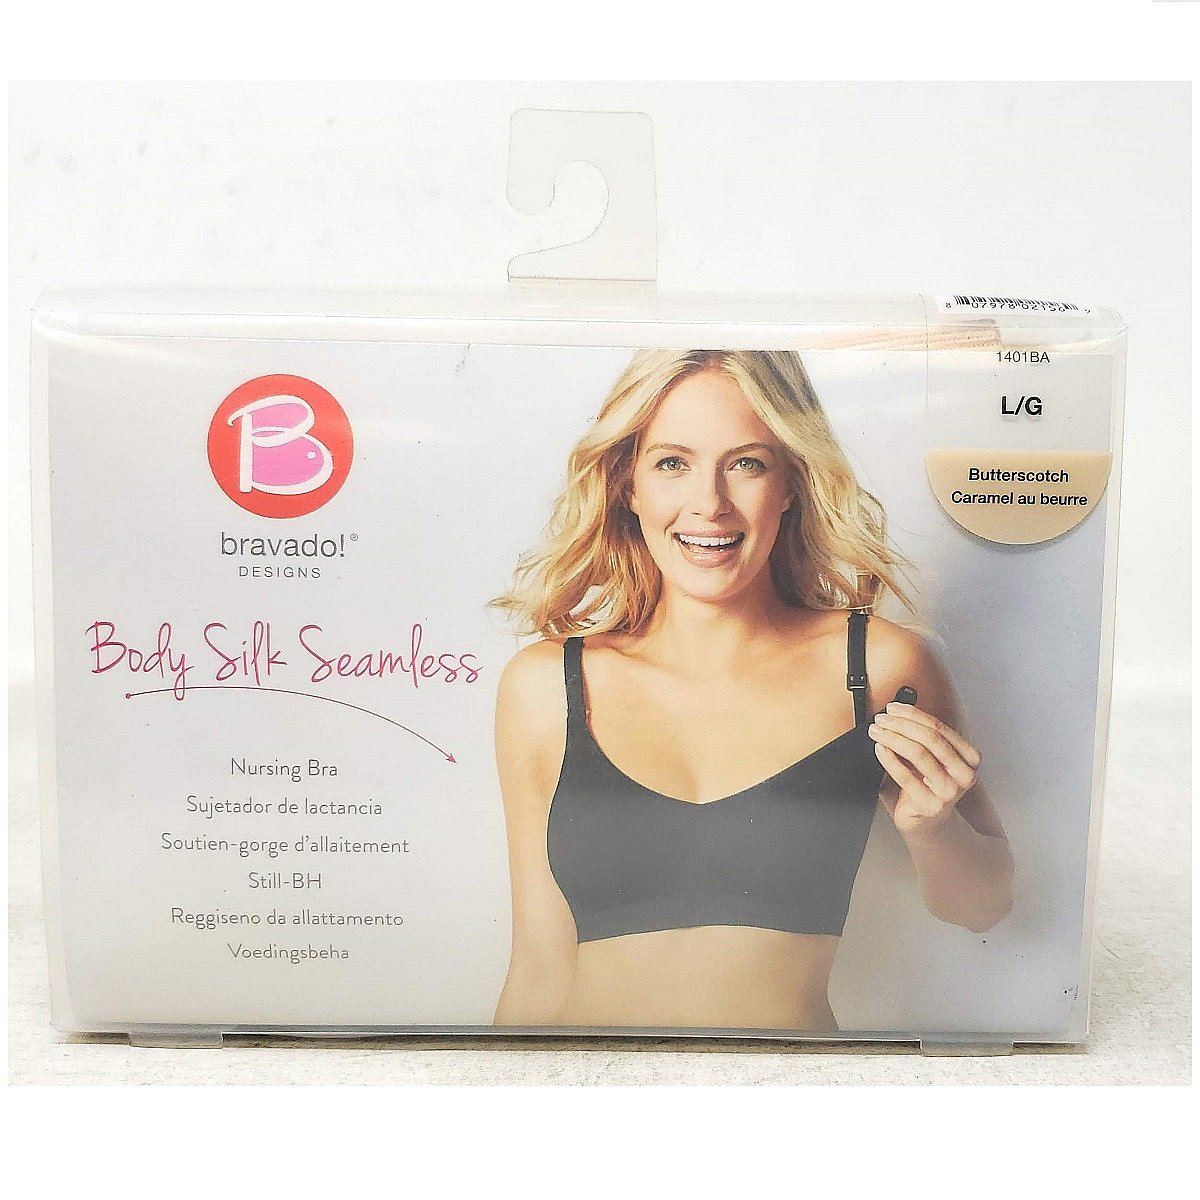 PMWholeSale - Body Silk Seamless Nursing Bra Butterscotch Large -1 pc,  (Bravado Designs)